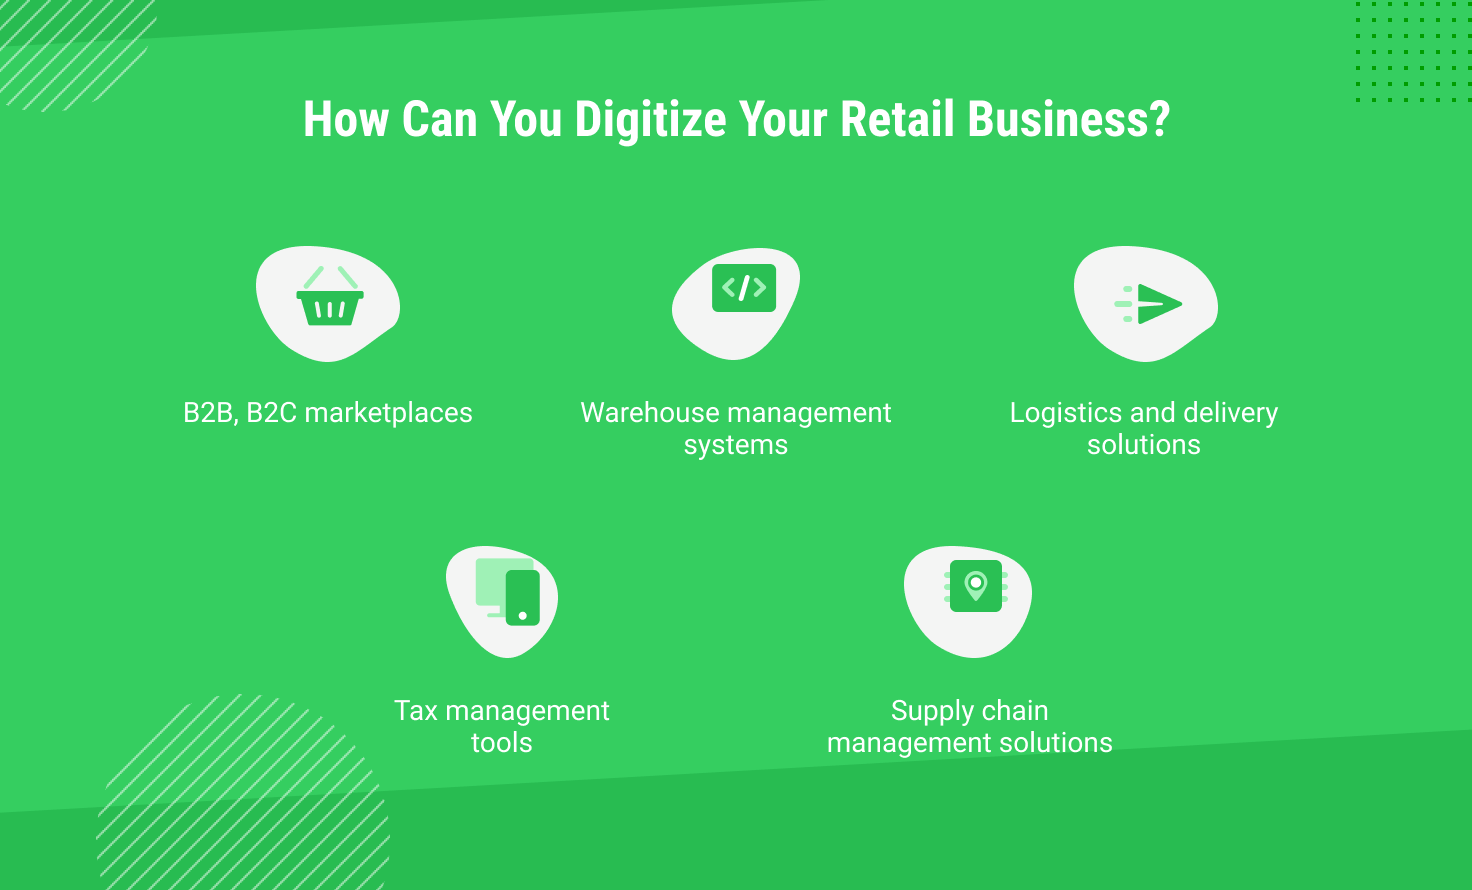 Retail business digitization solutions